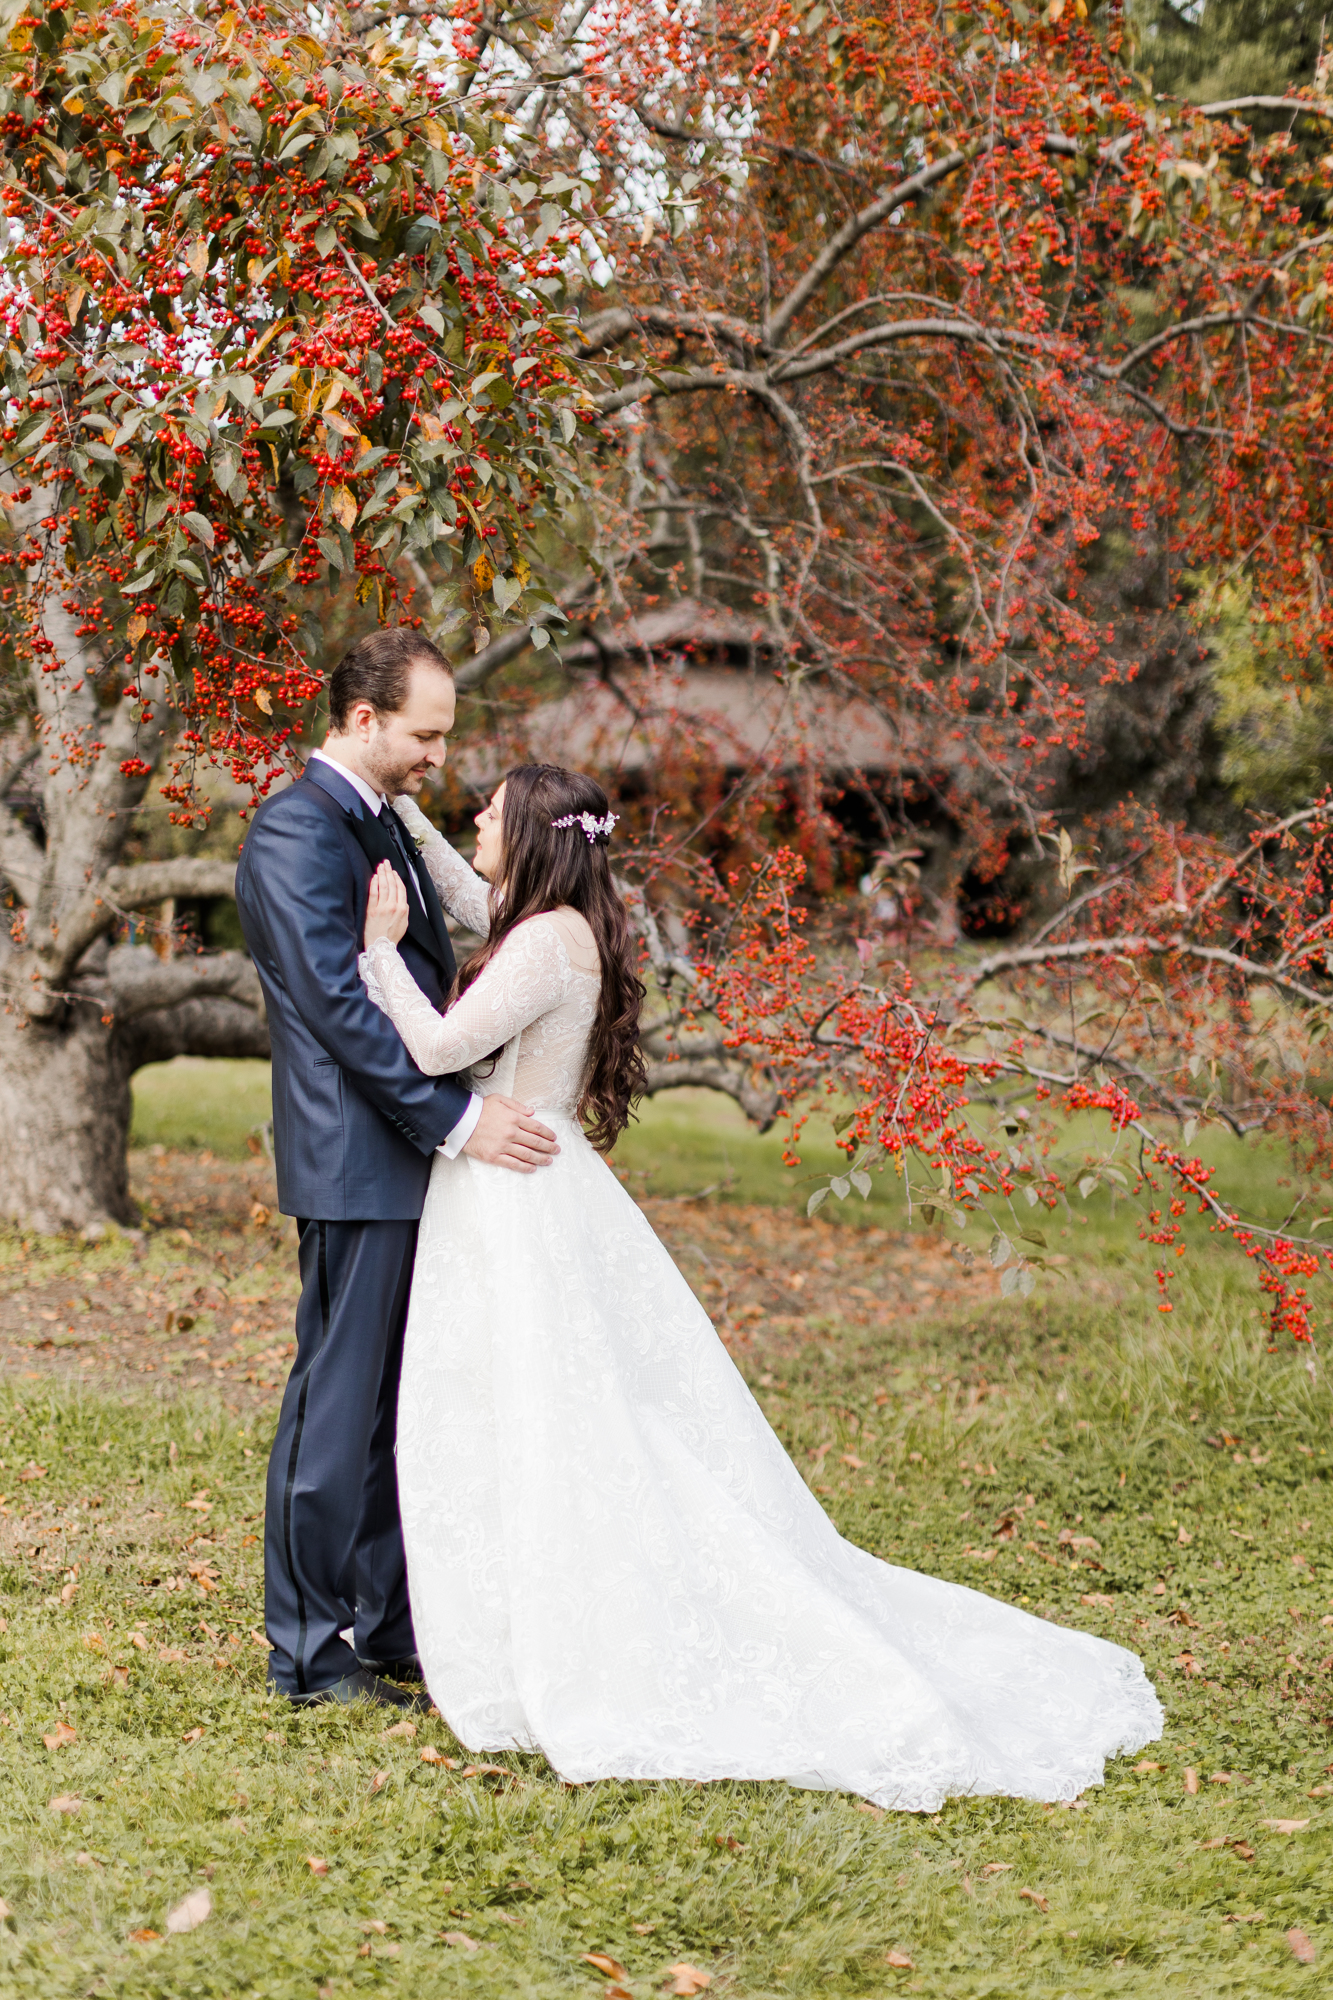 Lovely Fall Botanic Garden Wedding Photos in New York